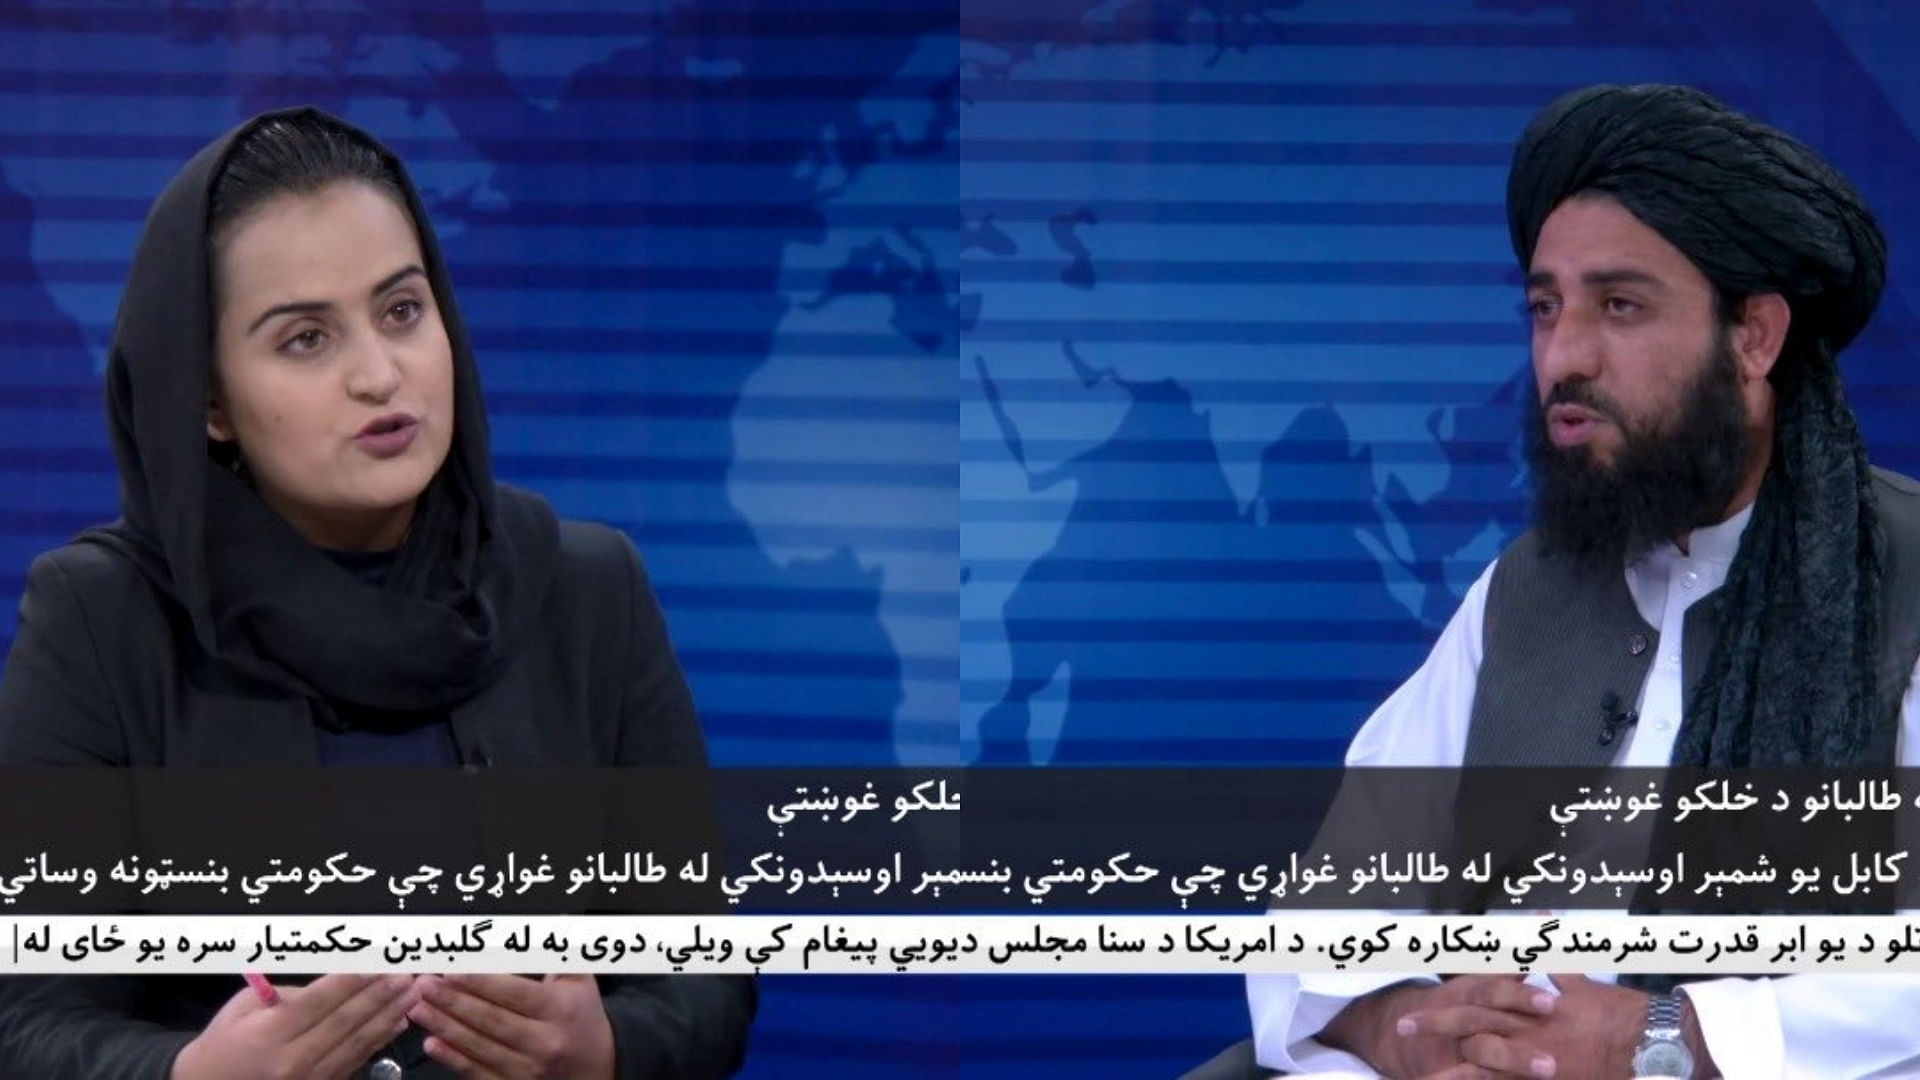 <div class="paragraphs"><p>तालिबान नेता ने महिला एंकर को दिया इंटरव्यू</p></div>